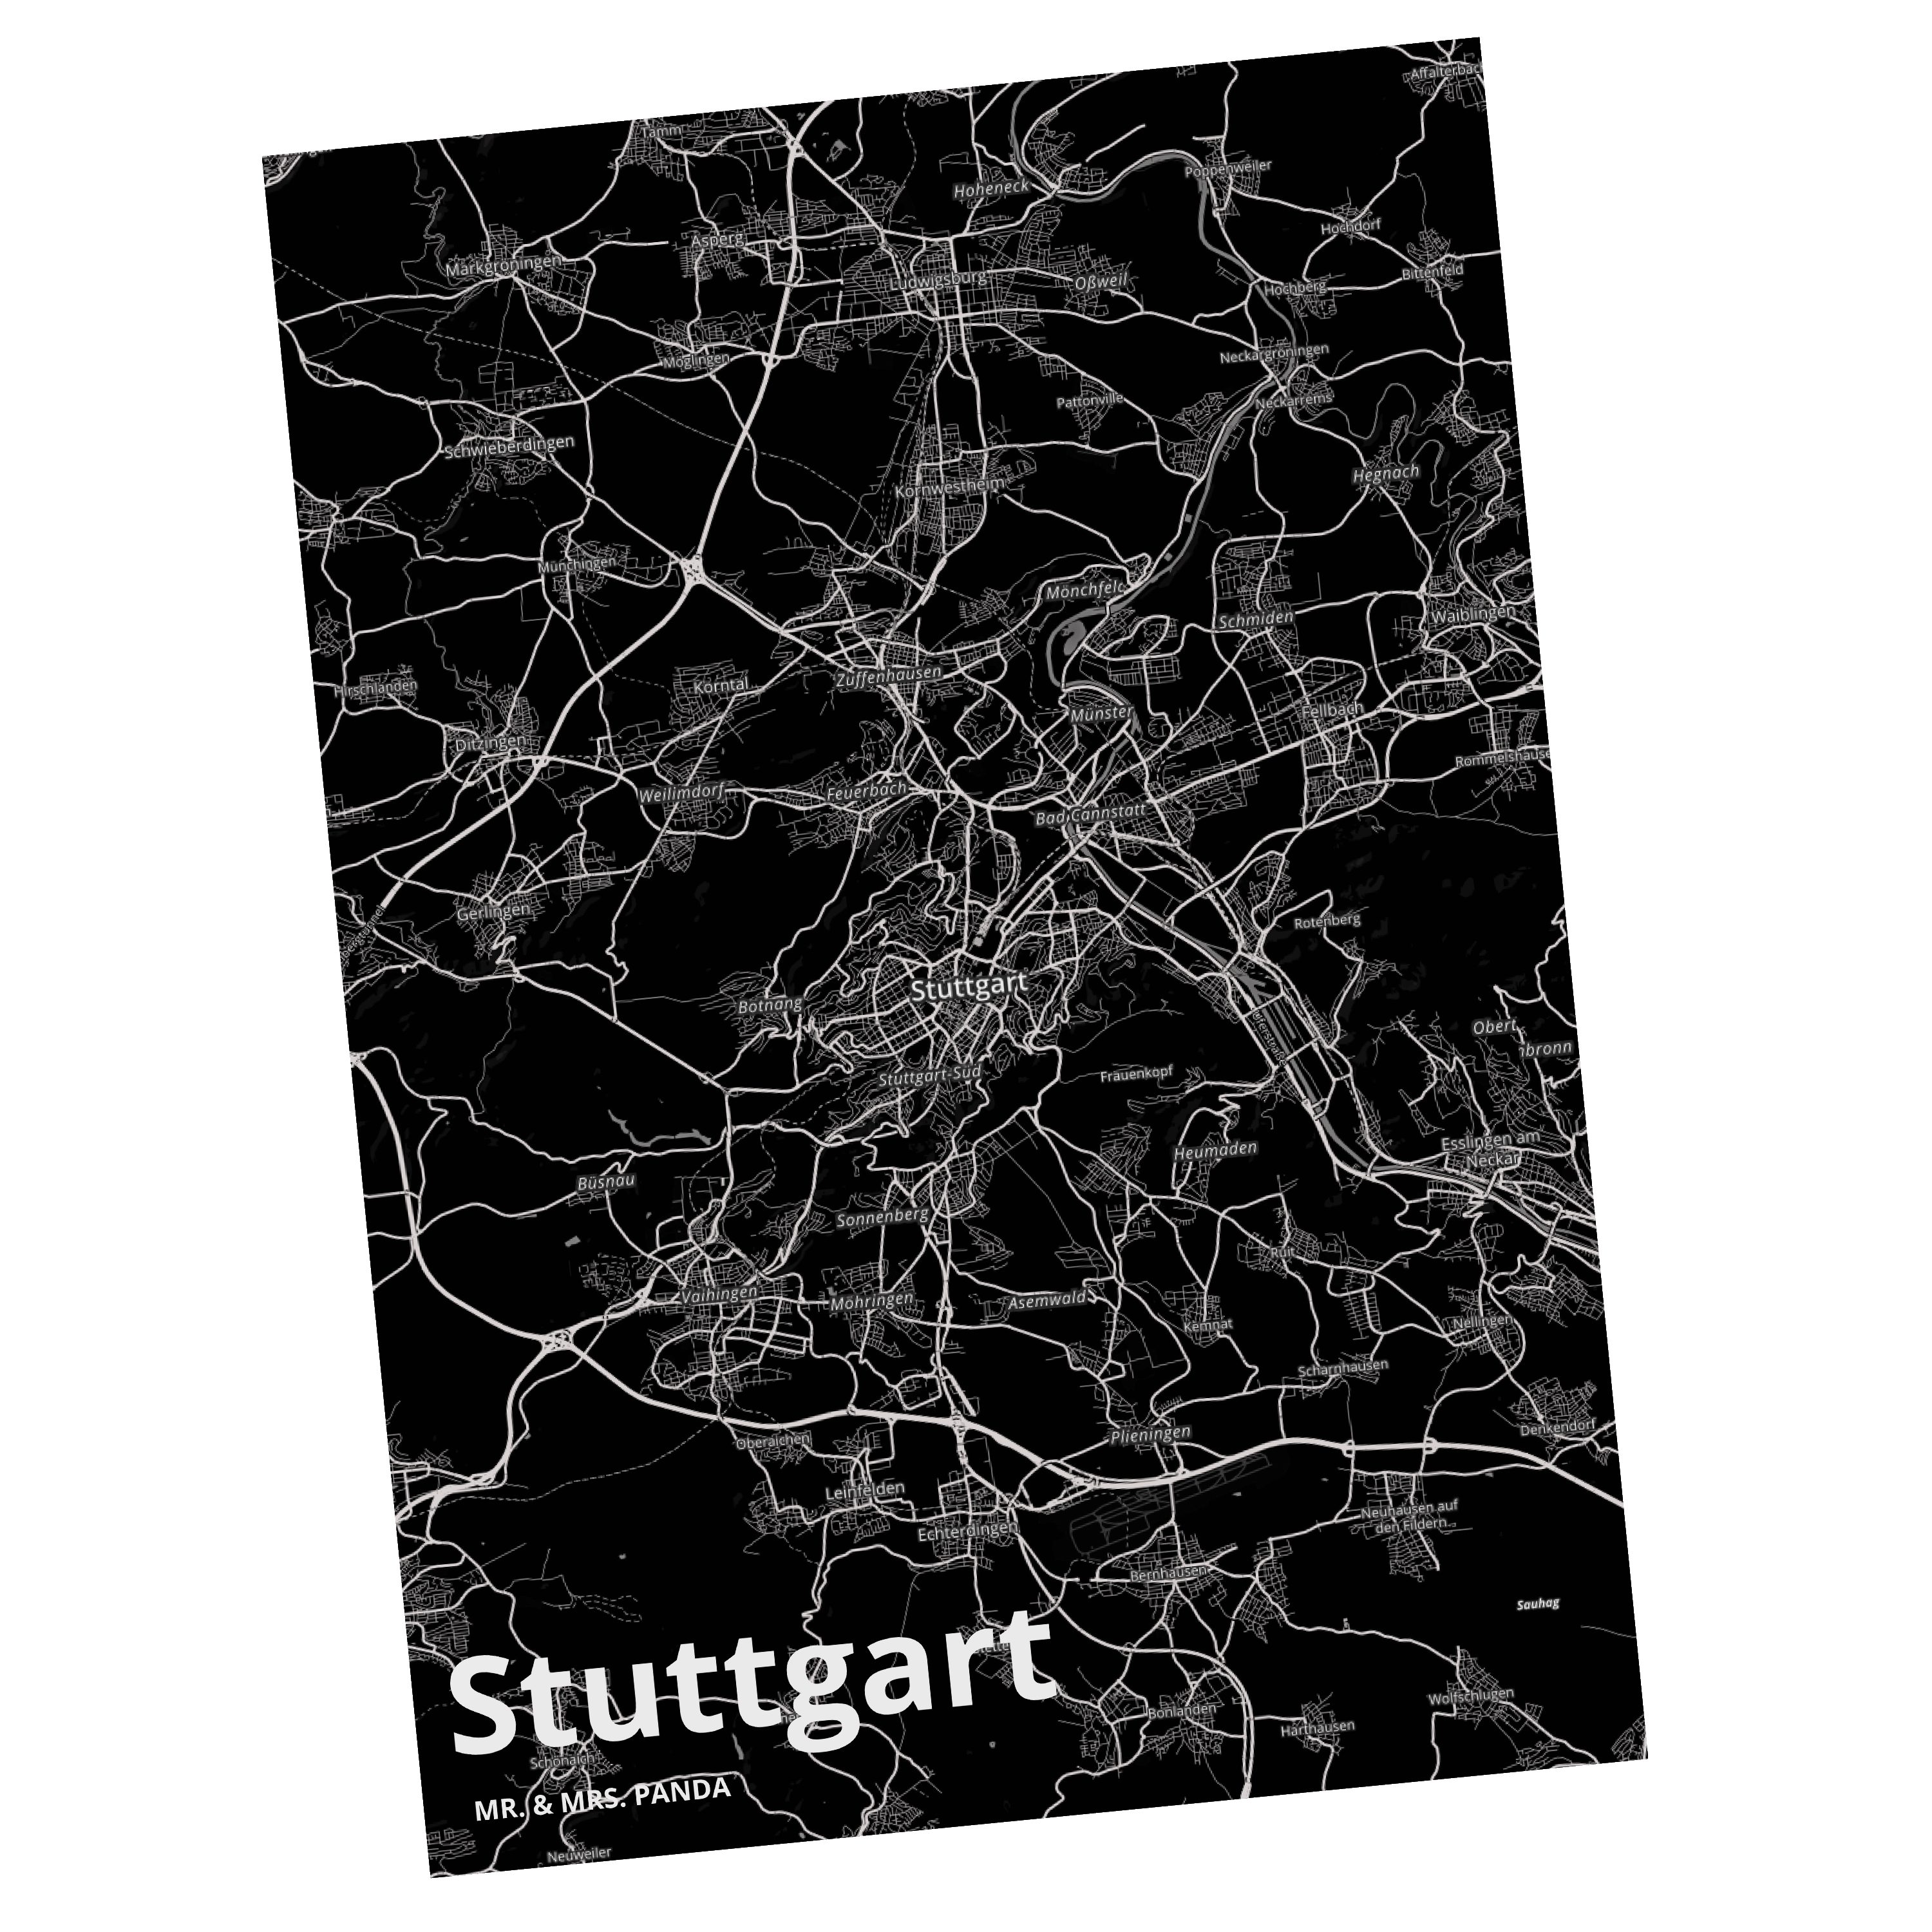 Mr. & Mrs. Panda Postkarte Stuttgart - Geschenk, Dorf, Dankeskarte, Grußkarte, Städte, Ort, Gebu